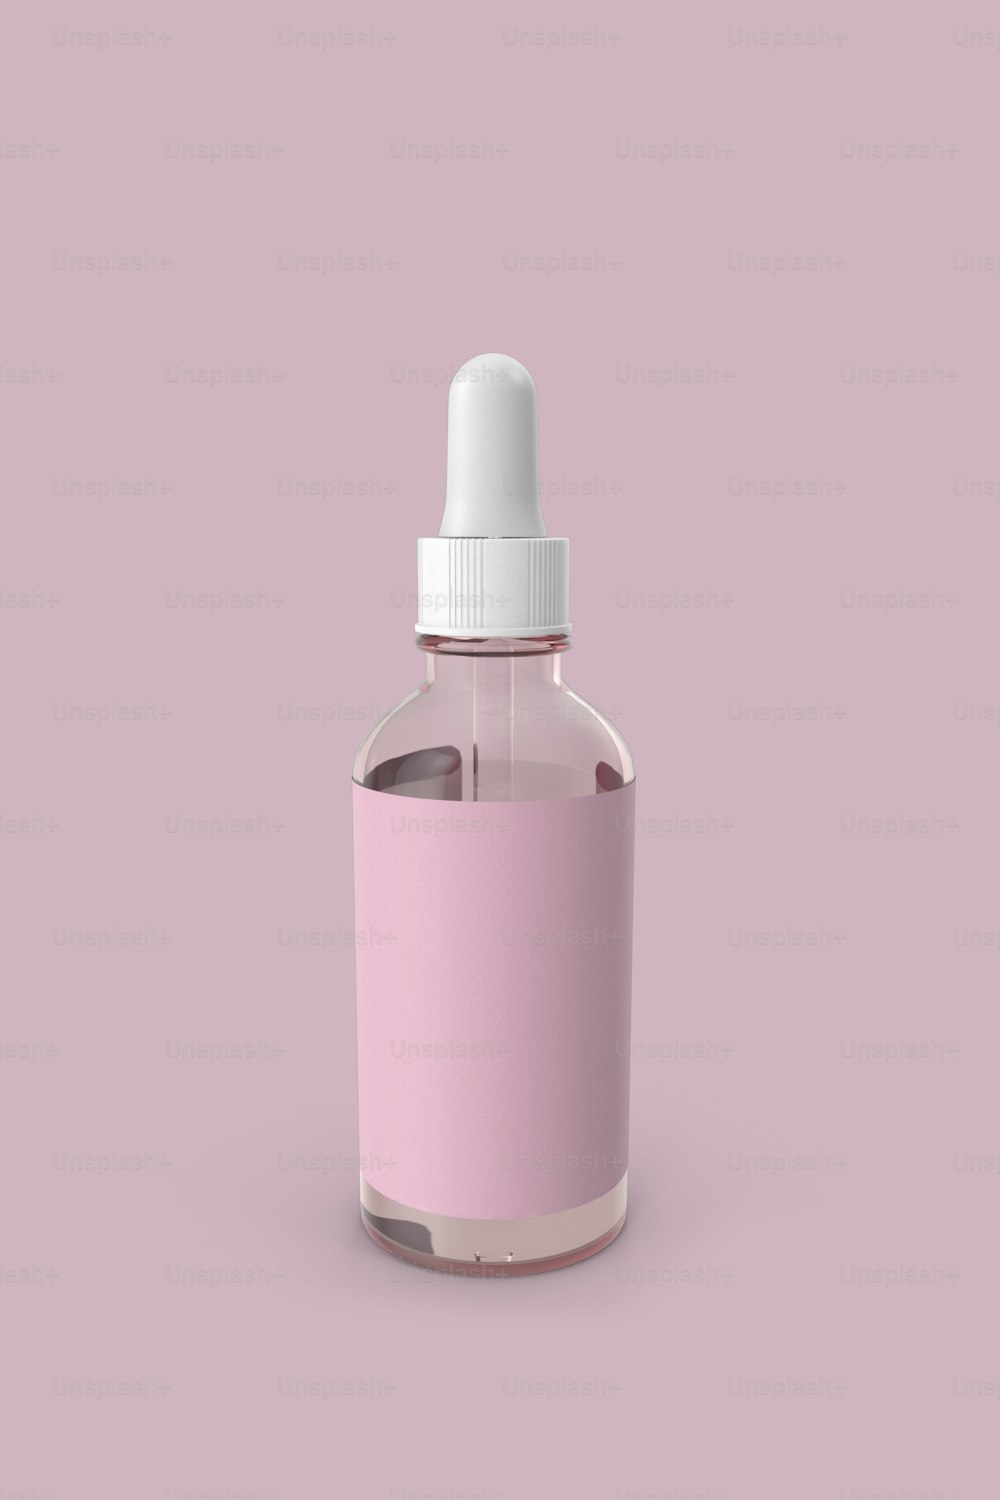 una botella rosa con una tapa blanca sobre un fondo rosa